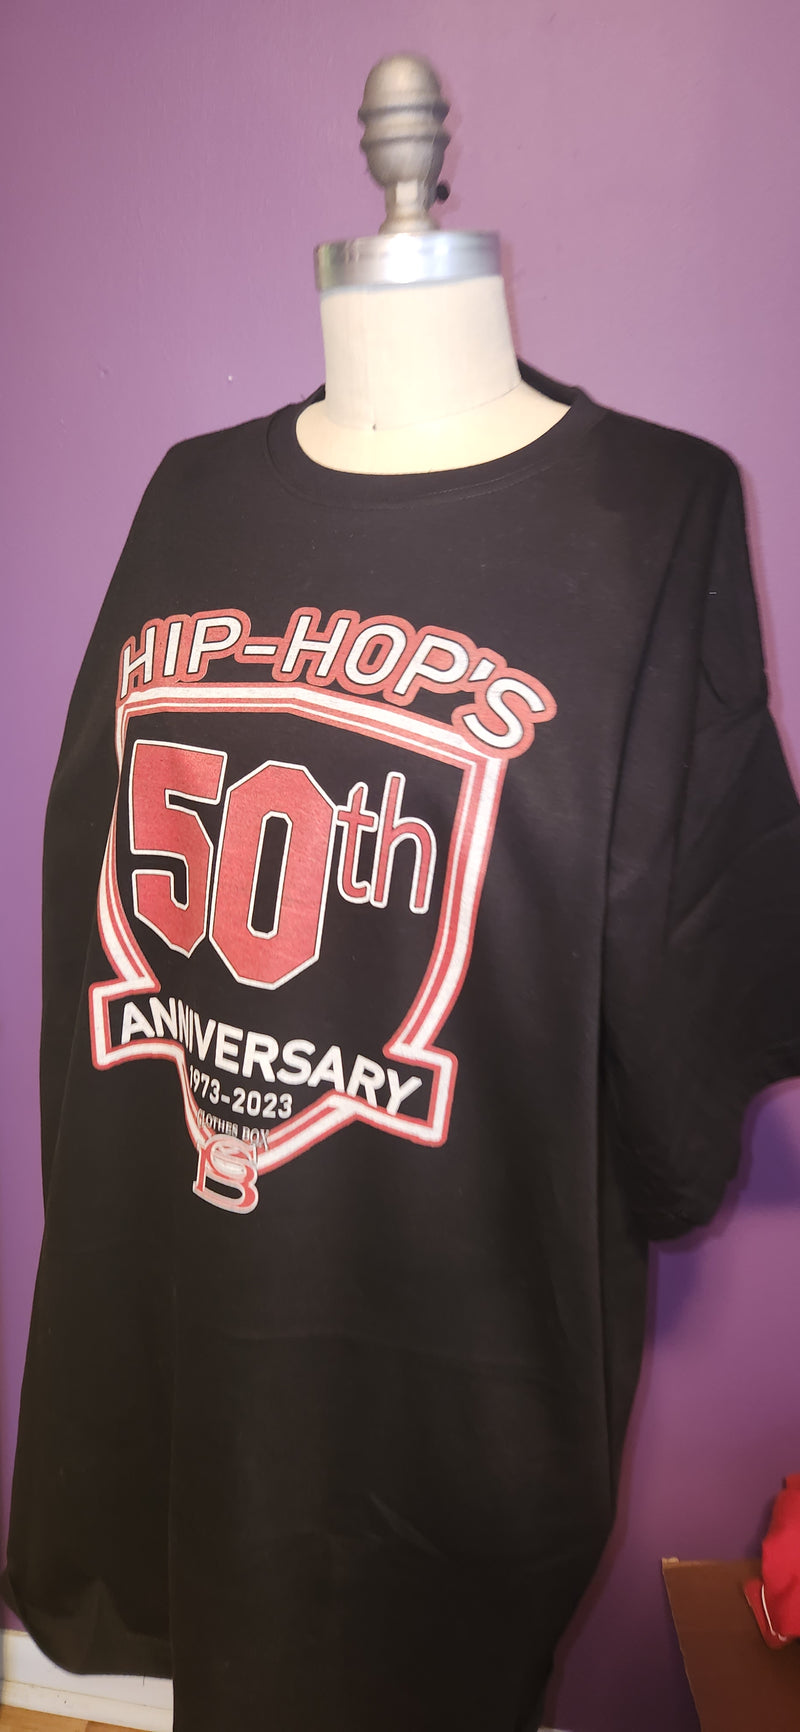 Hip Hop's 50 Year Anniversary